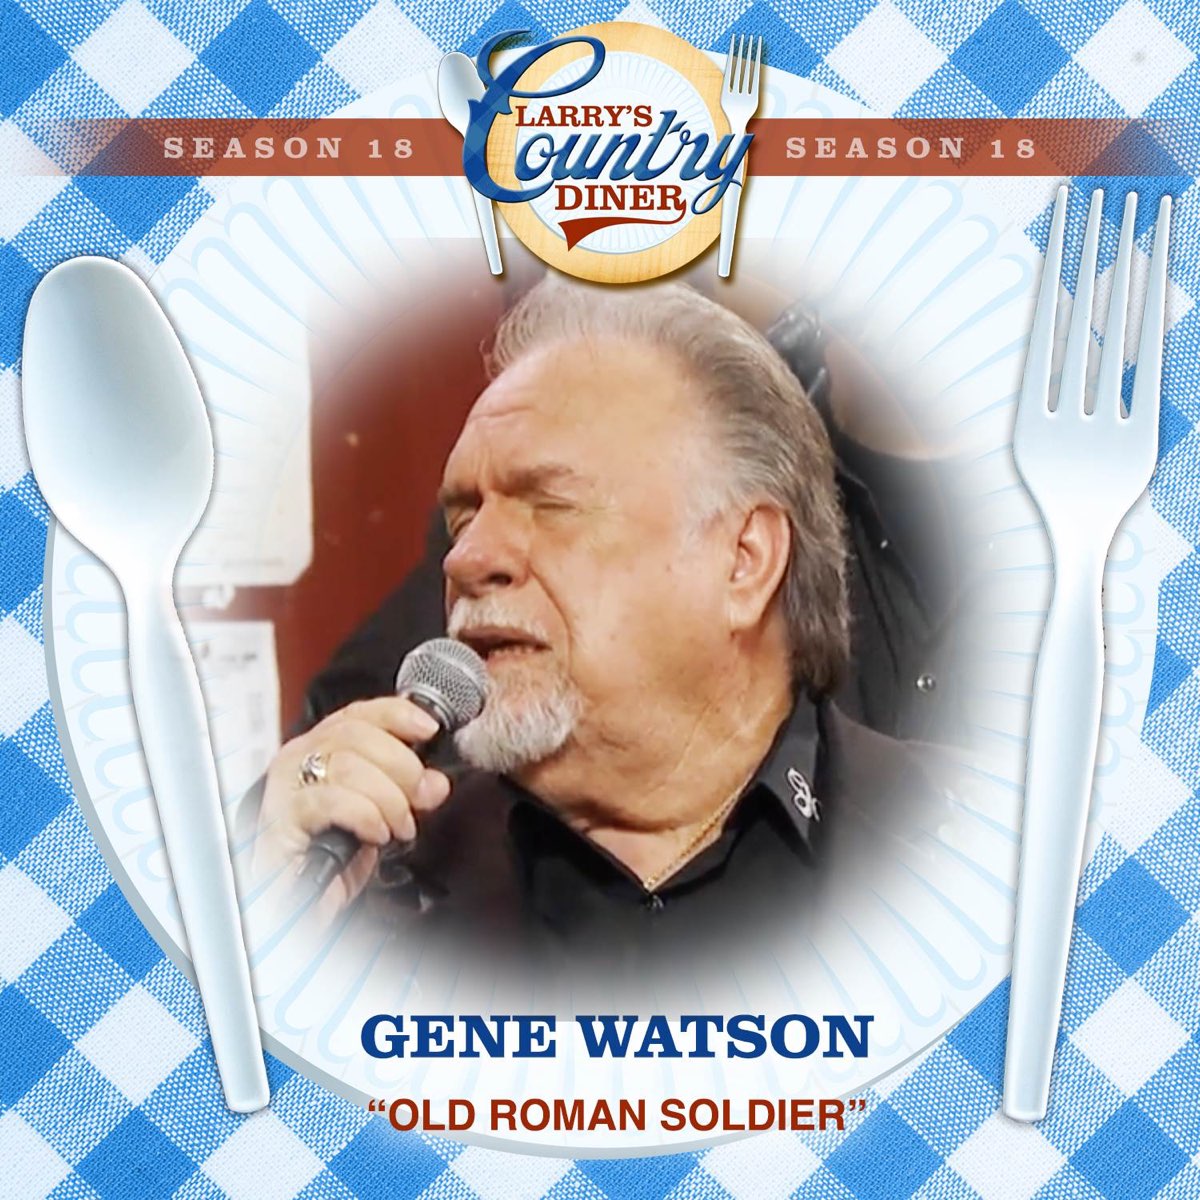 old-roman-soldier-larry-s-country-diner-season-18-single-de-gene